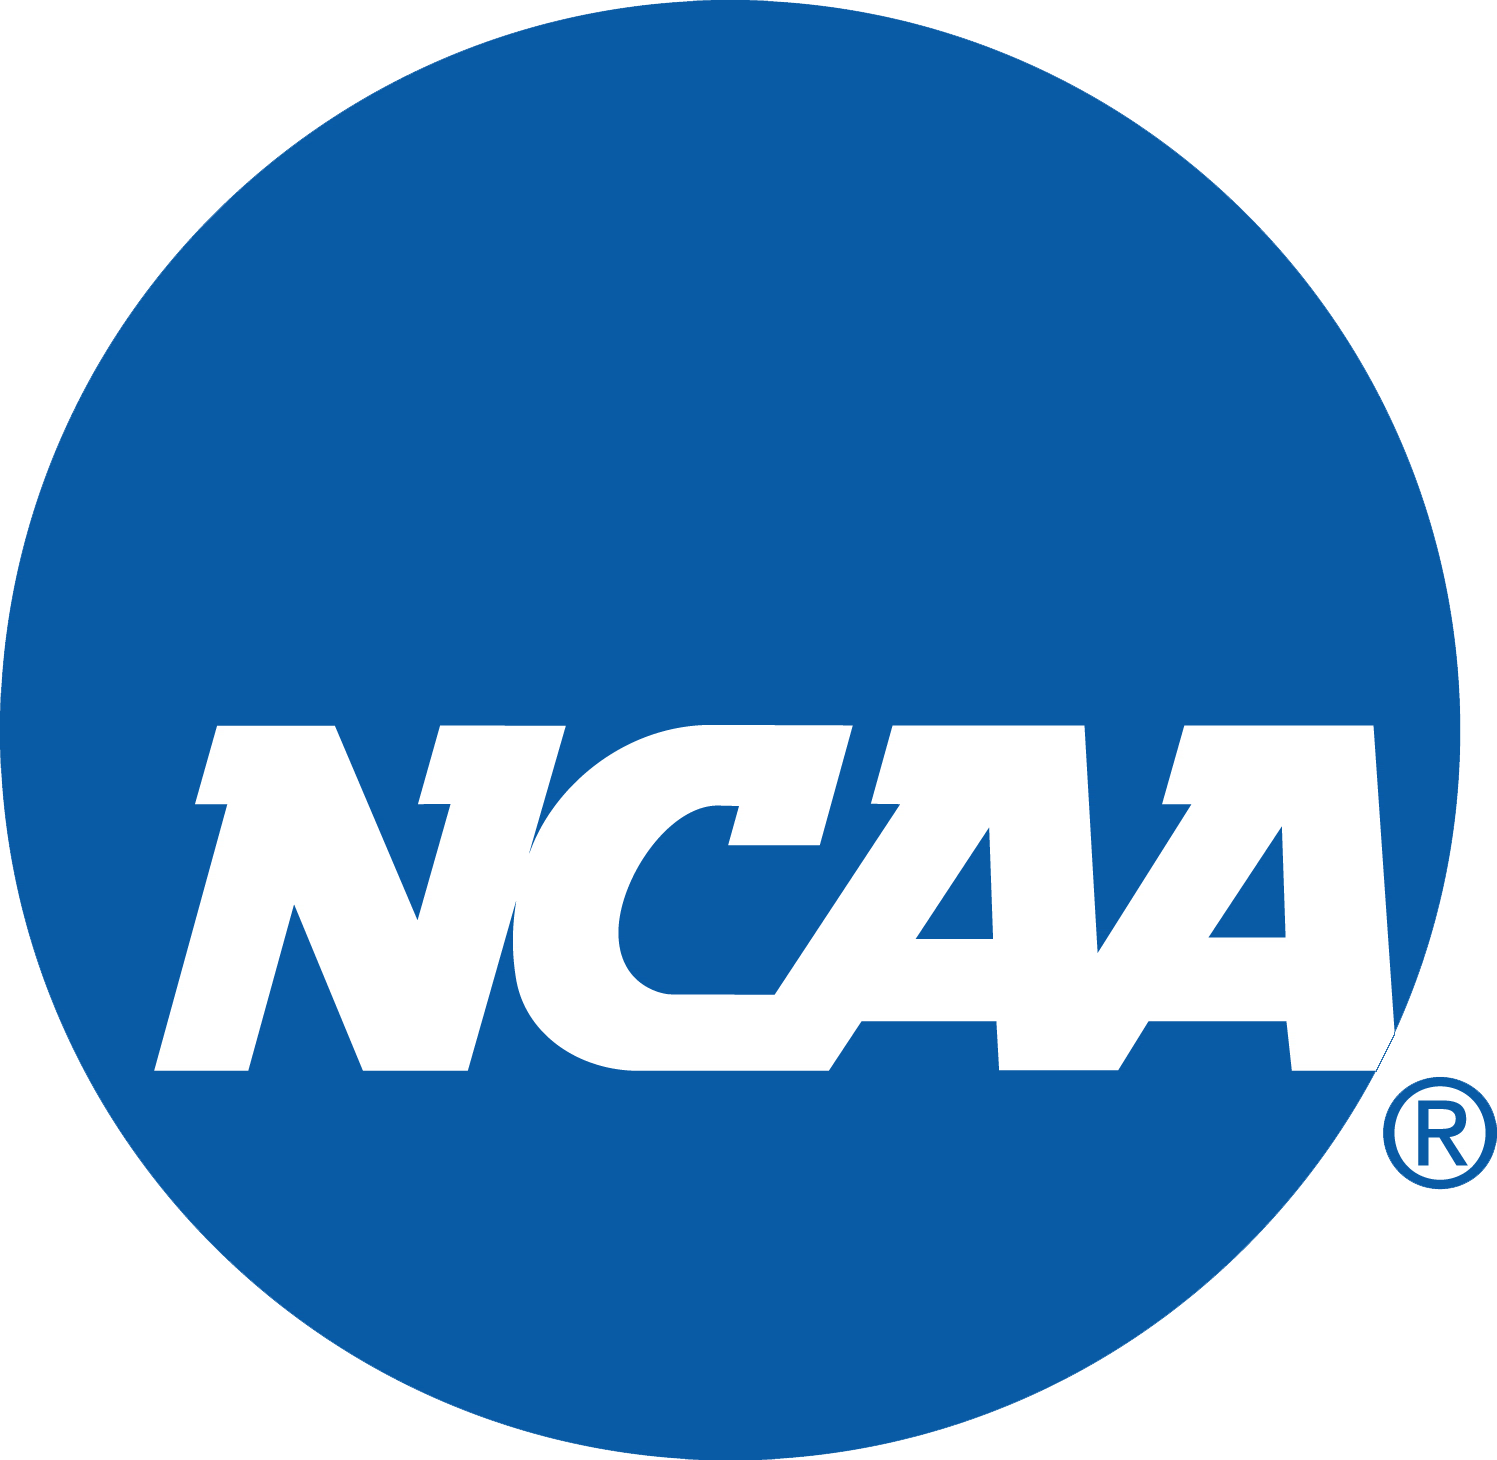 College Basketball Logos